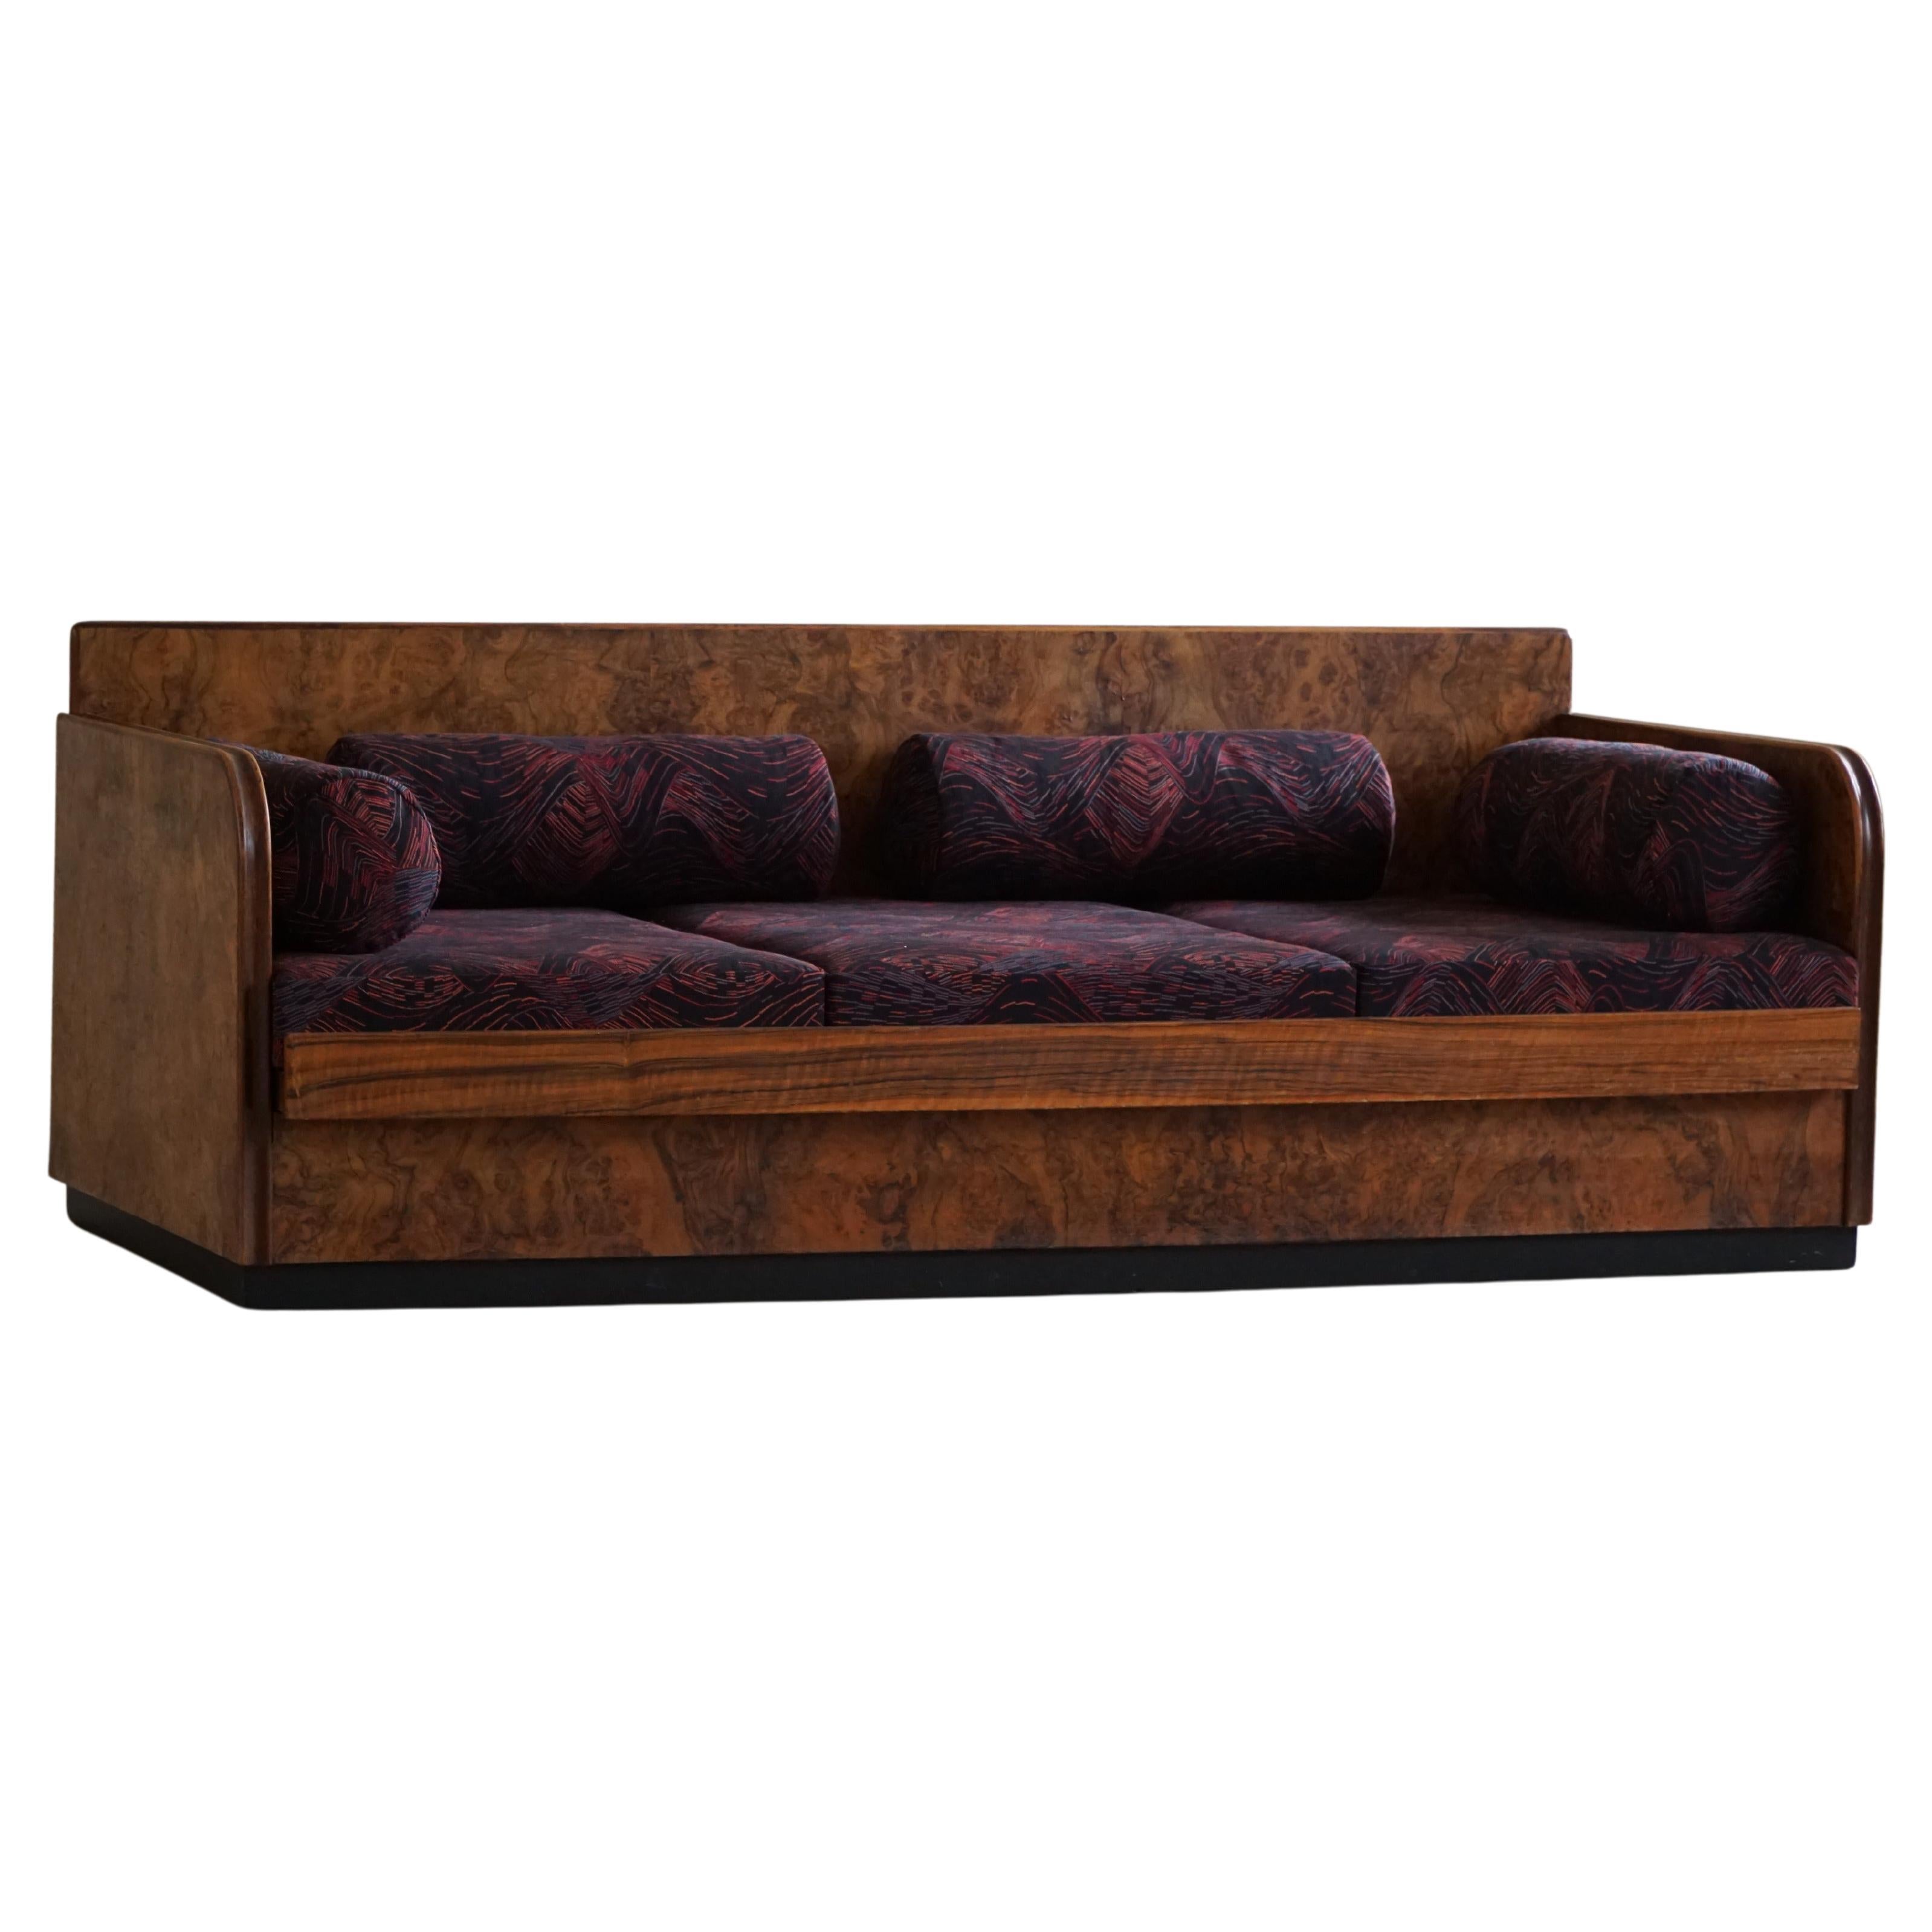 Sculptural Sofa in Nutwood & Burl, Art Deco, Swedish Cabinetmaker, 1940s For Sale